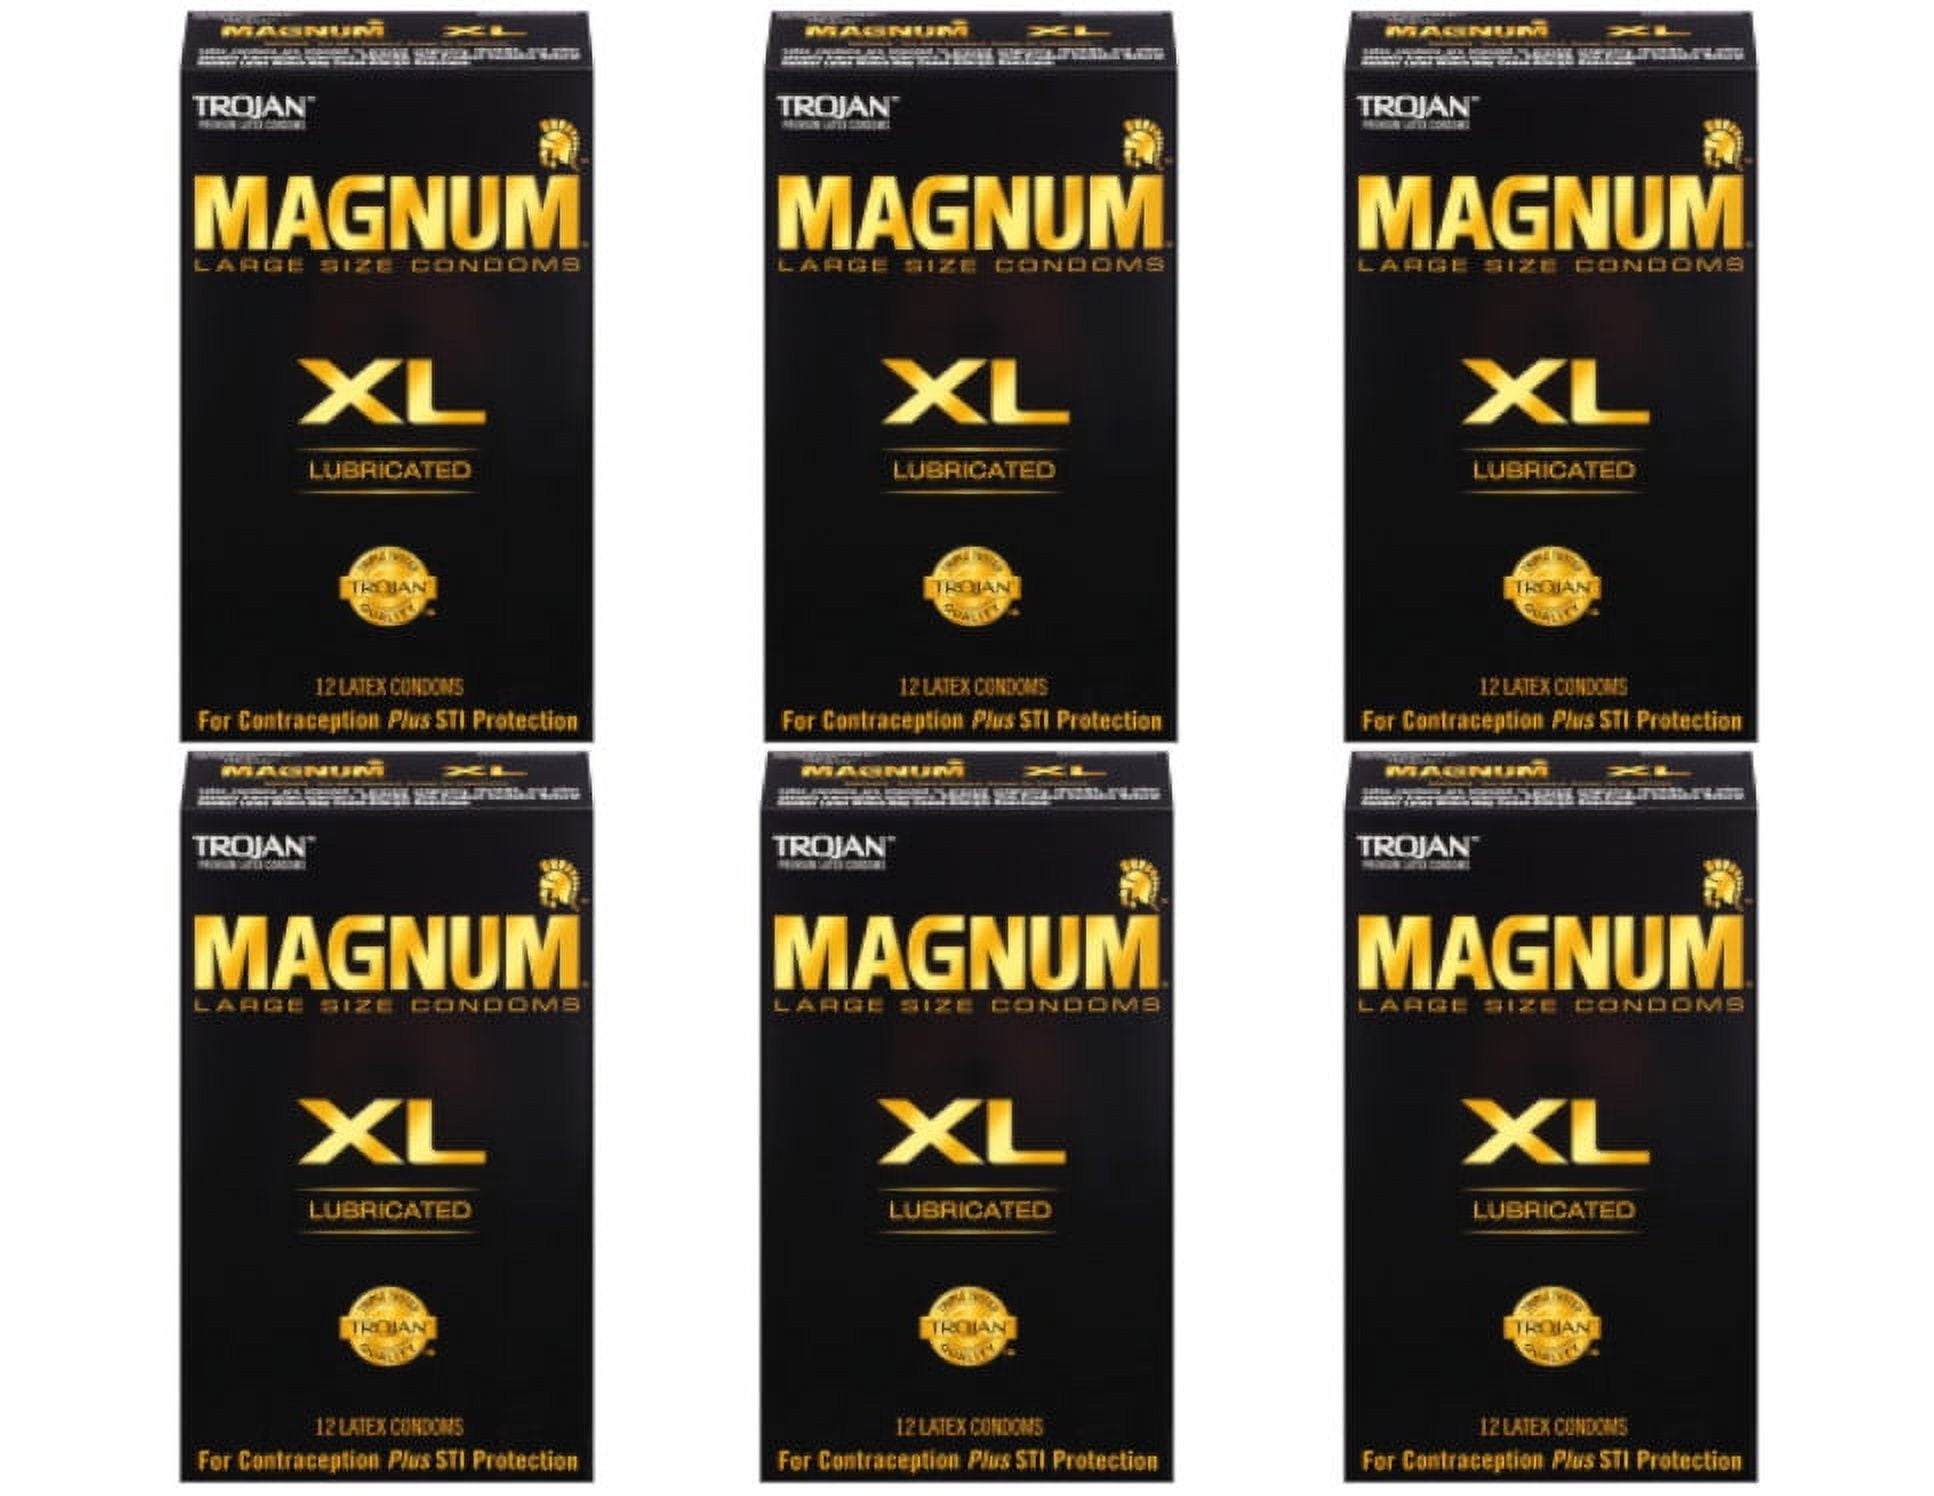 Trojan Magnum XL Latex Condoms 12 Pack